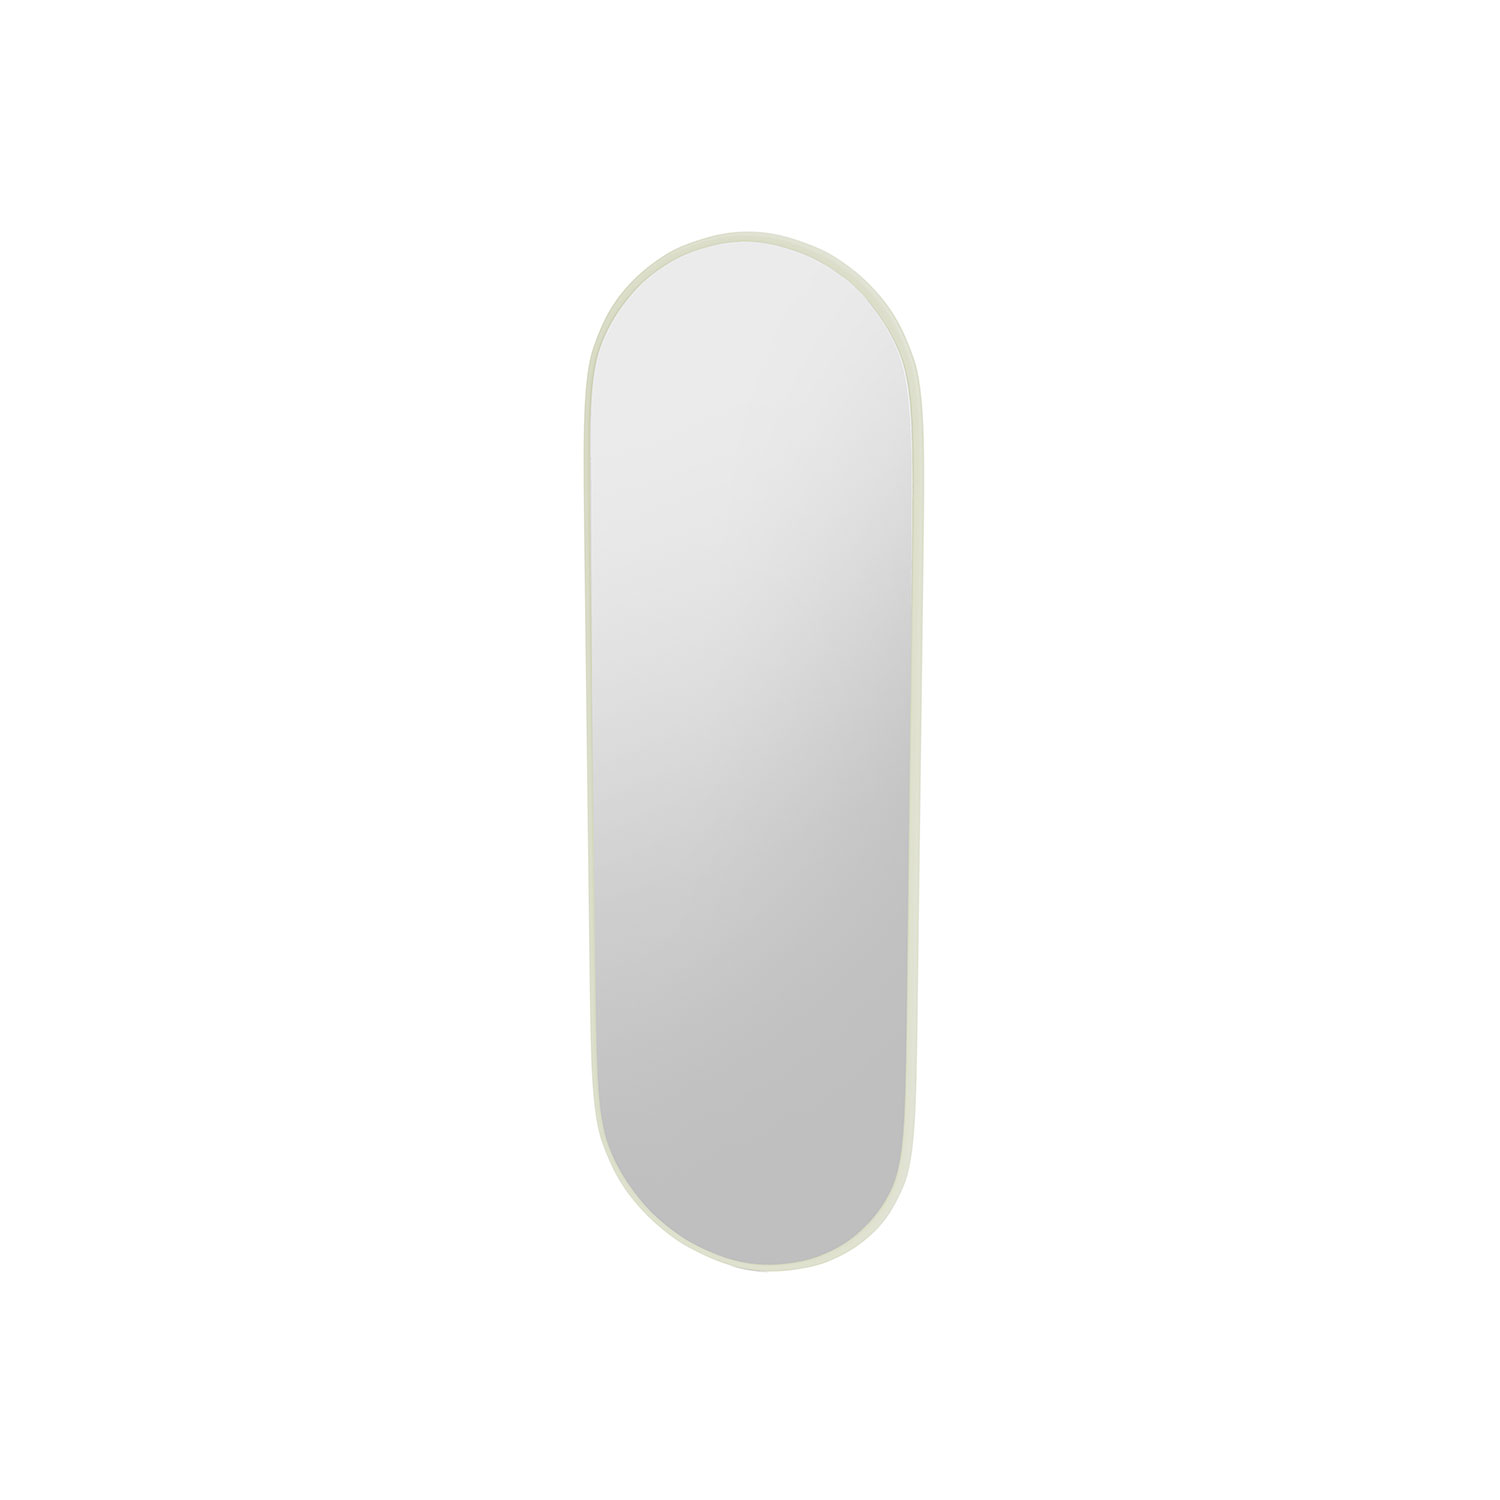 FIGURE oval mirror, Pomelo